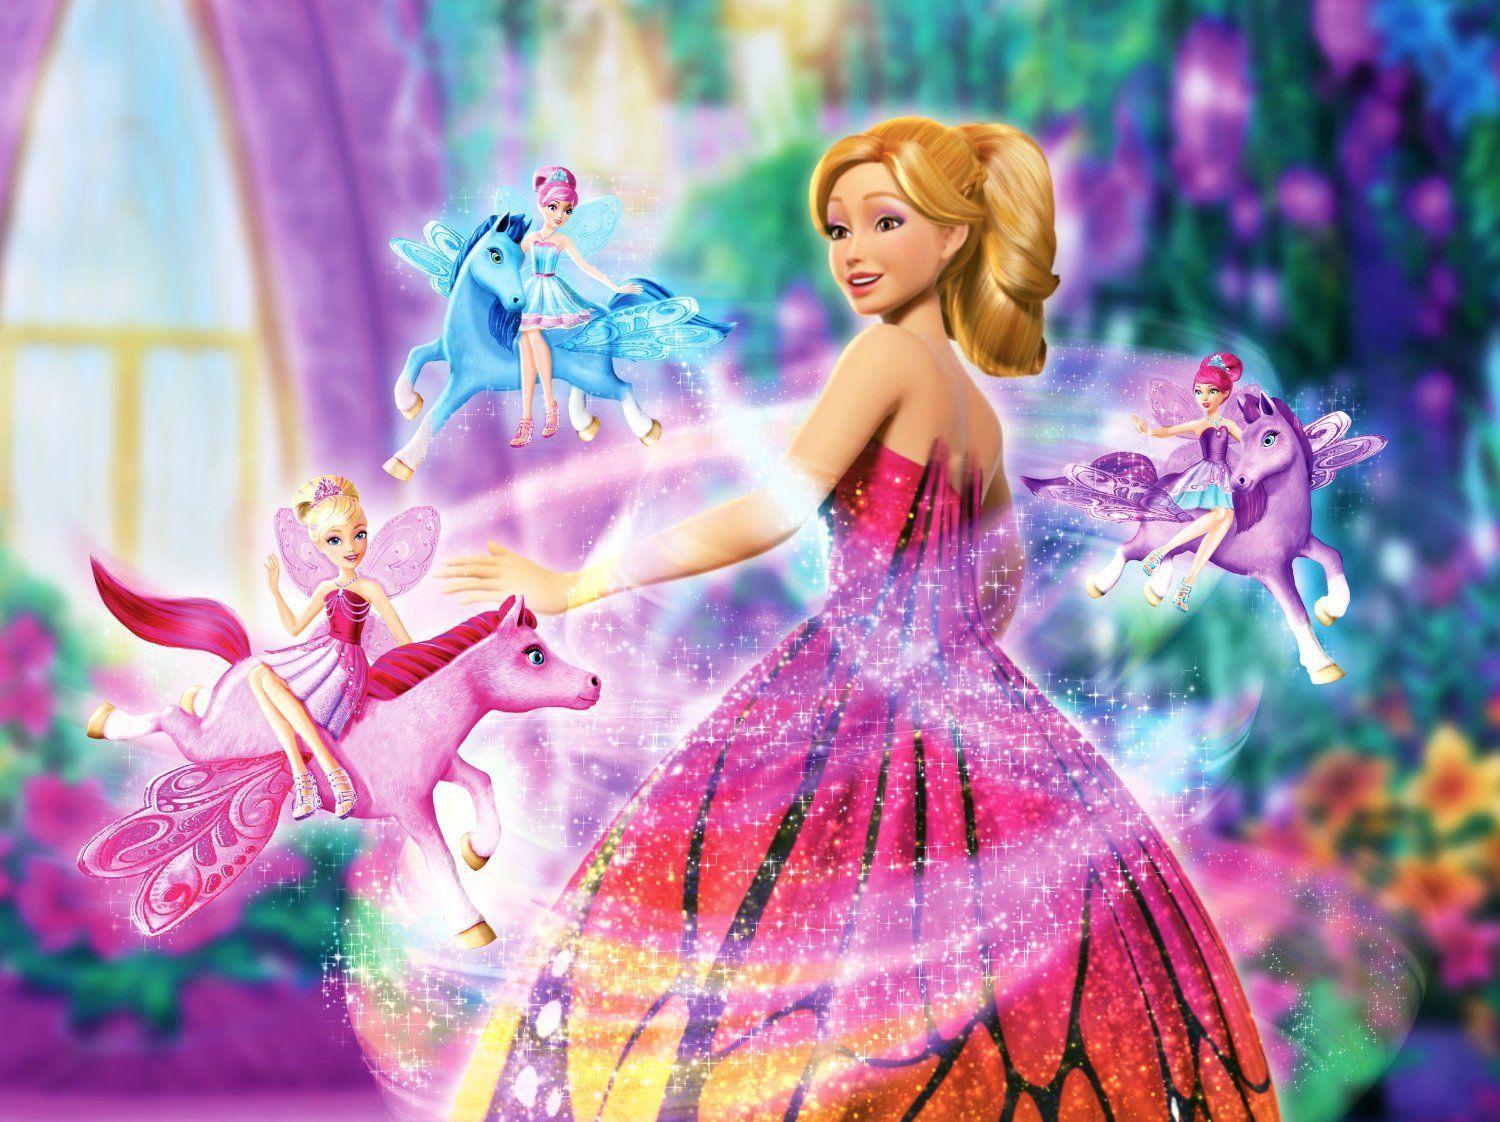 Barbie Princess Wallpapers - Top Free Barbie Princess Backgrounds ...